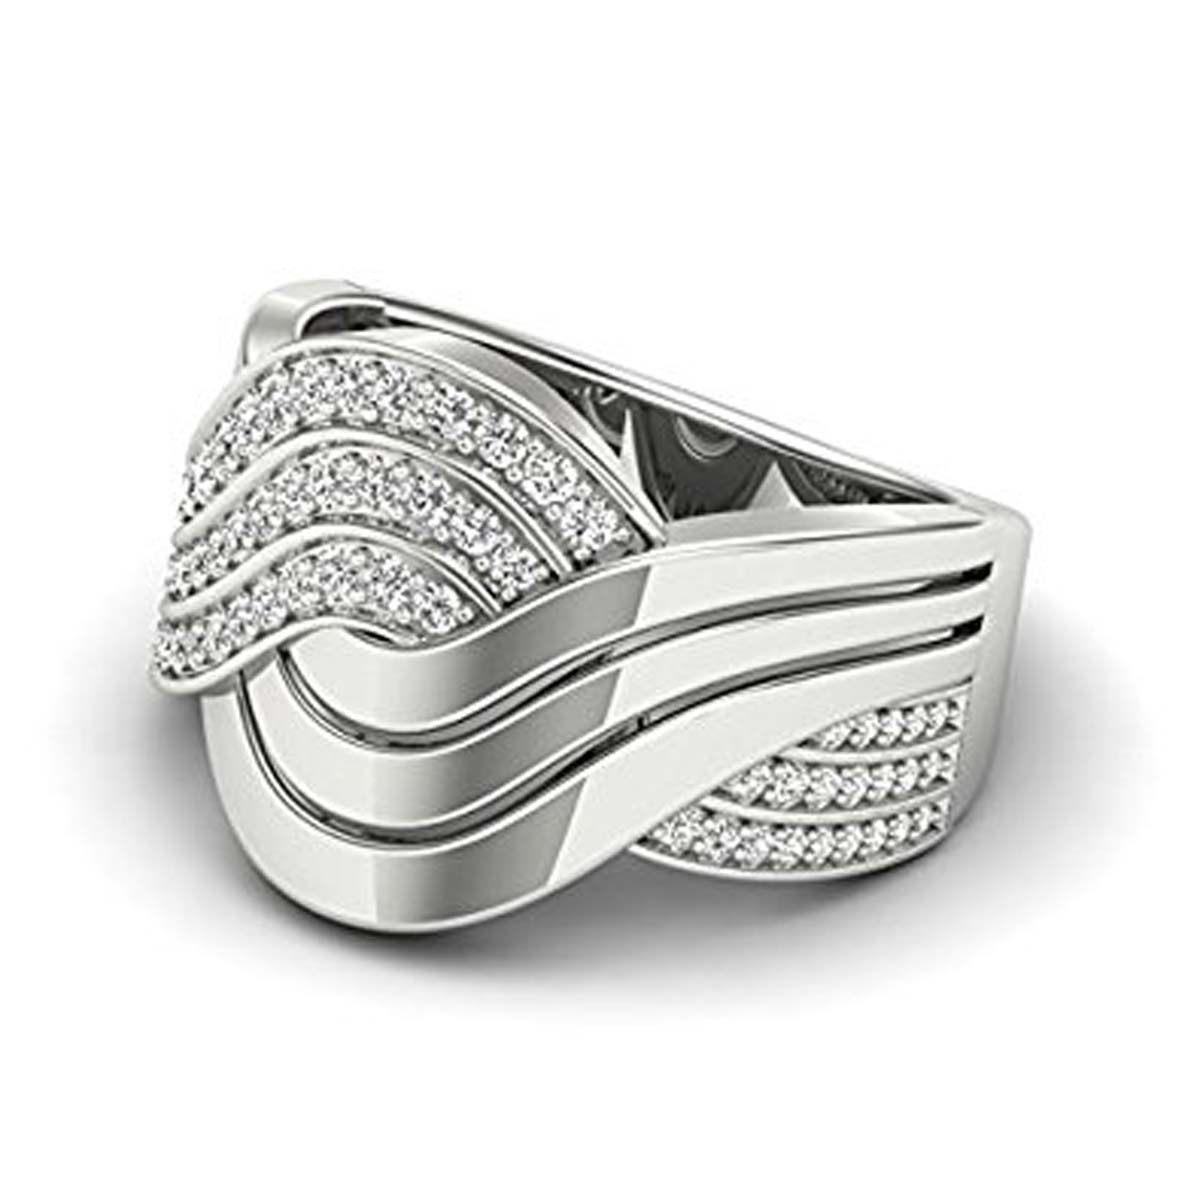 Round Cut White CZ Diamond Wedding Engagement Infinity Band Men's Ring